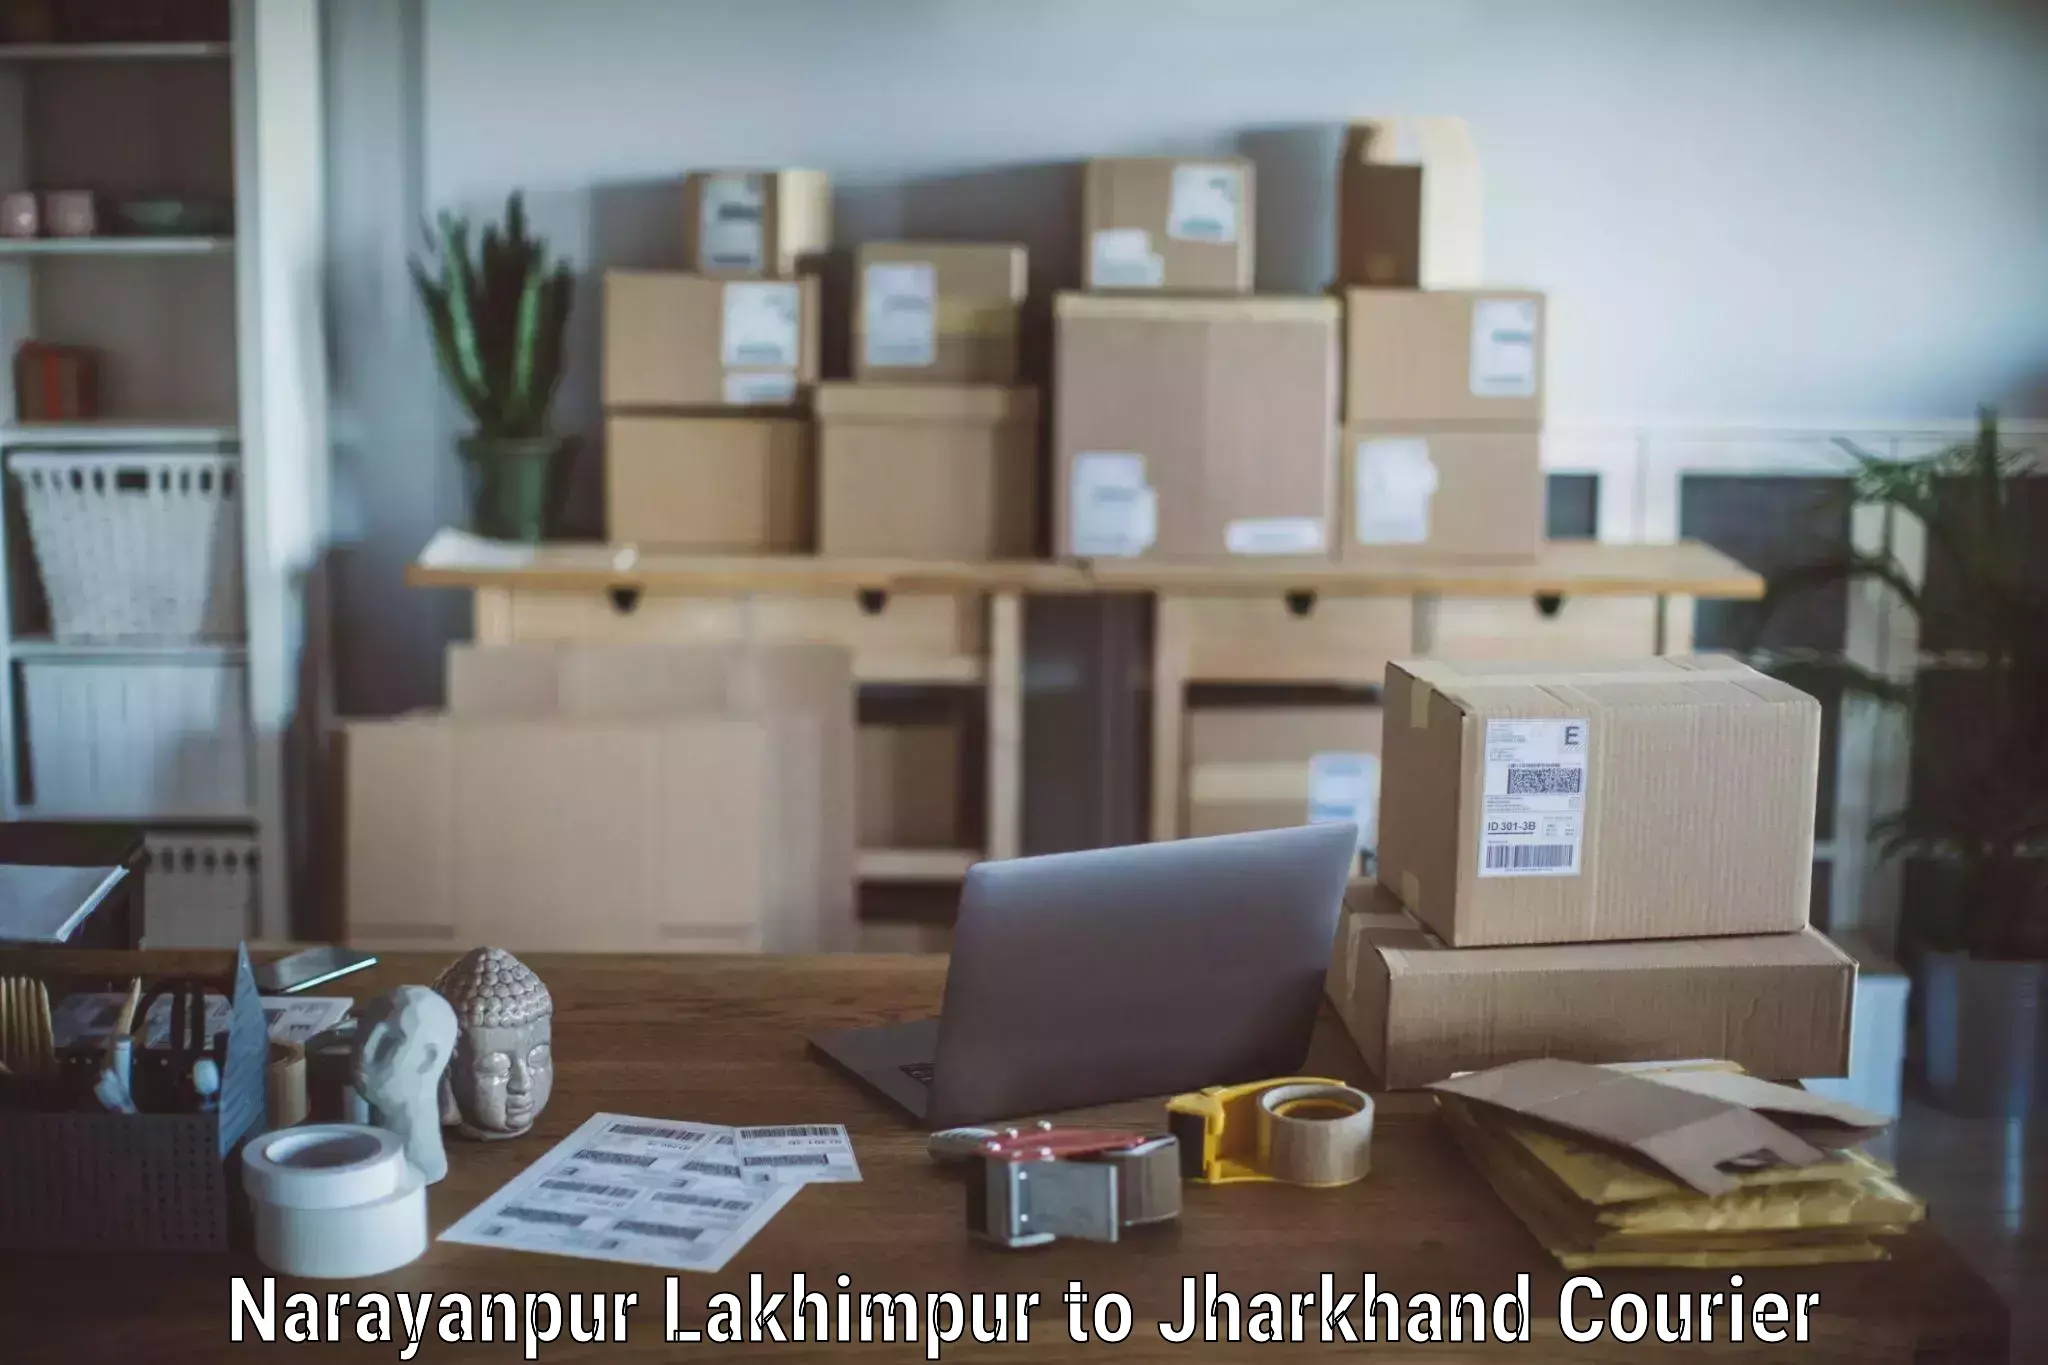 Professional packing services Narayanpur Lakhimpur to Topchanchi